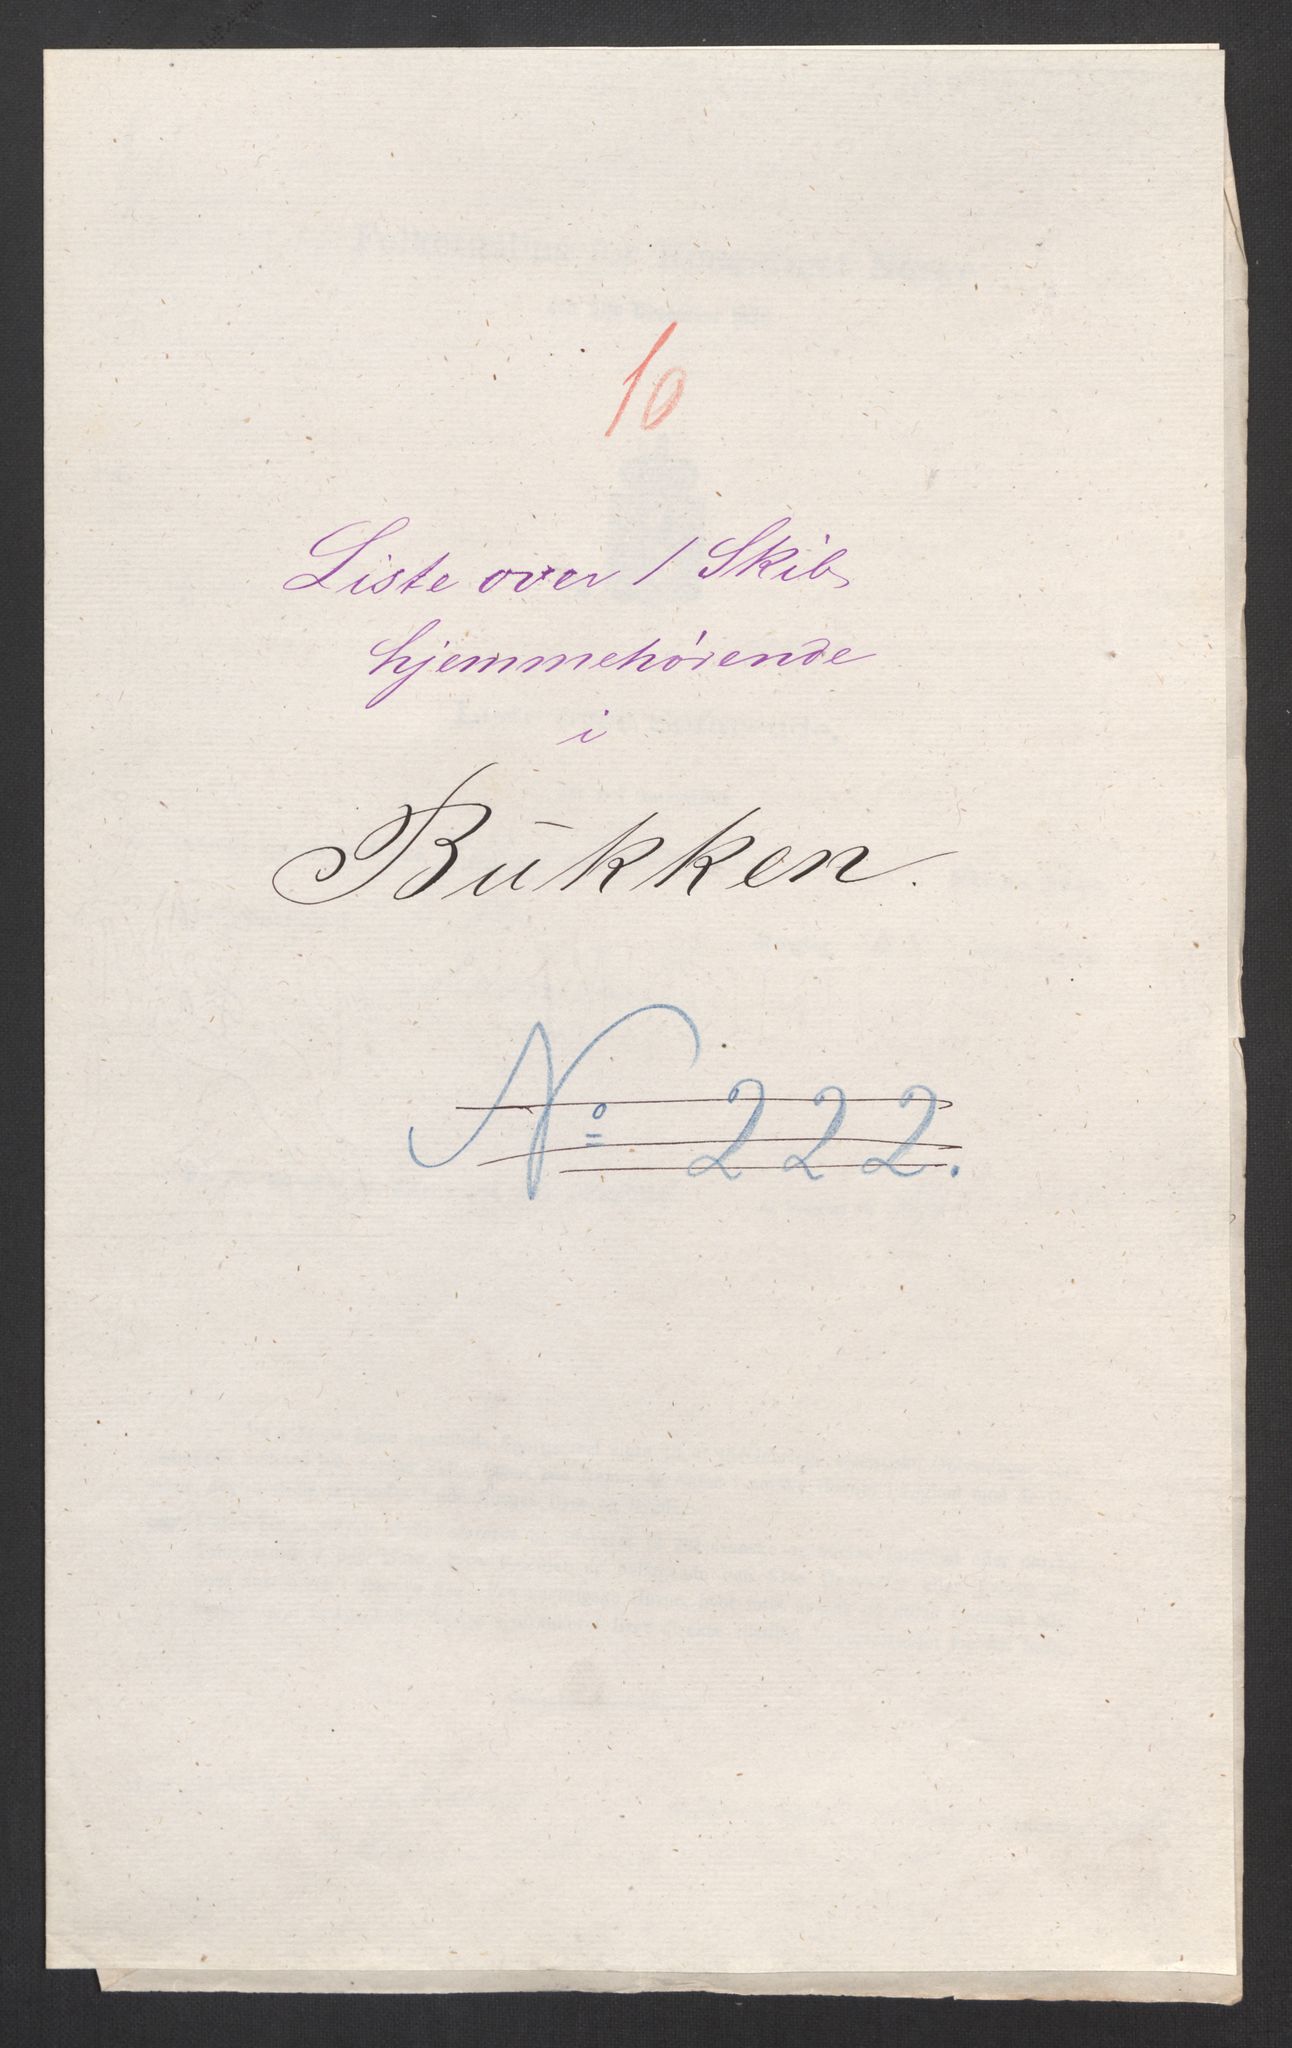 RA, Folketelling 1875, skipslister: Skip i utenrikske havner, hjemmehørende i 1) byer og ladesteder, Grimstad - Tromsø, 2) landdistrikter, 1875, s. 1135